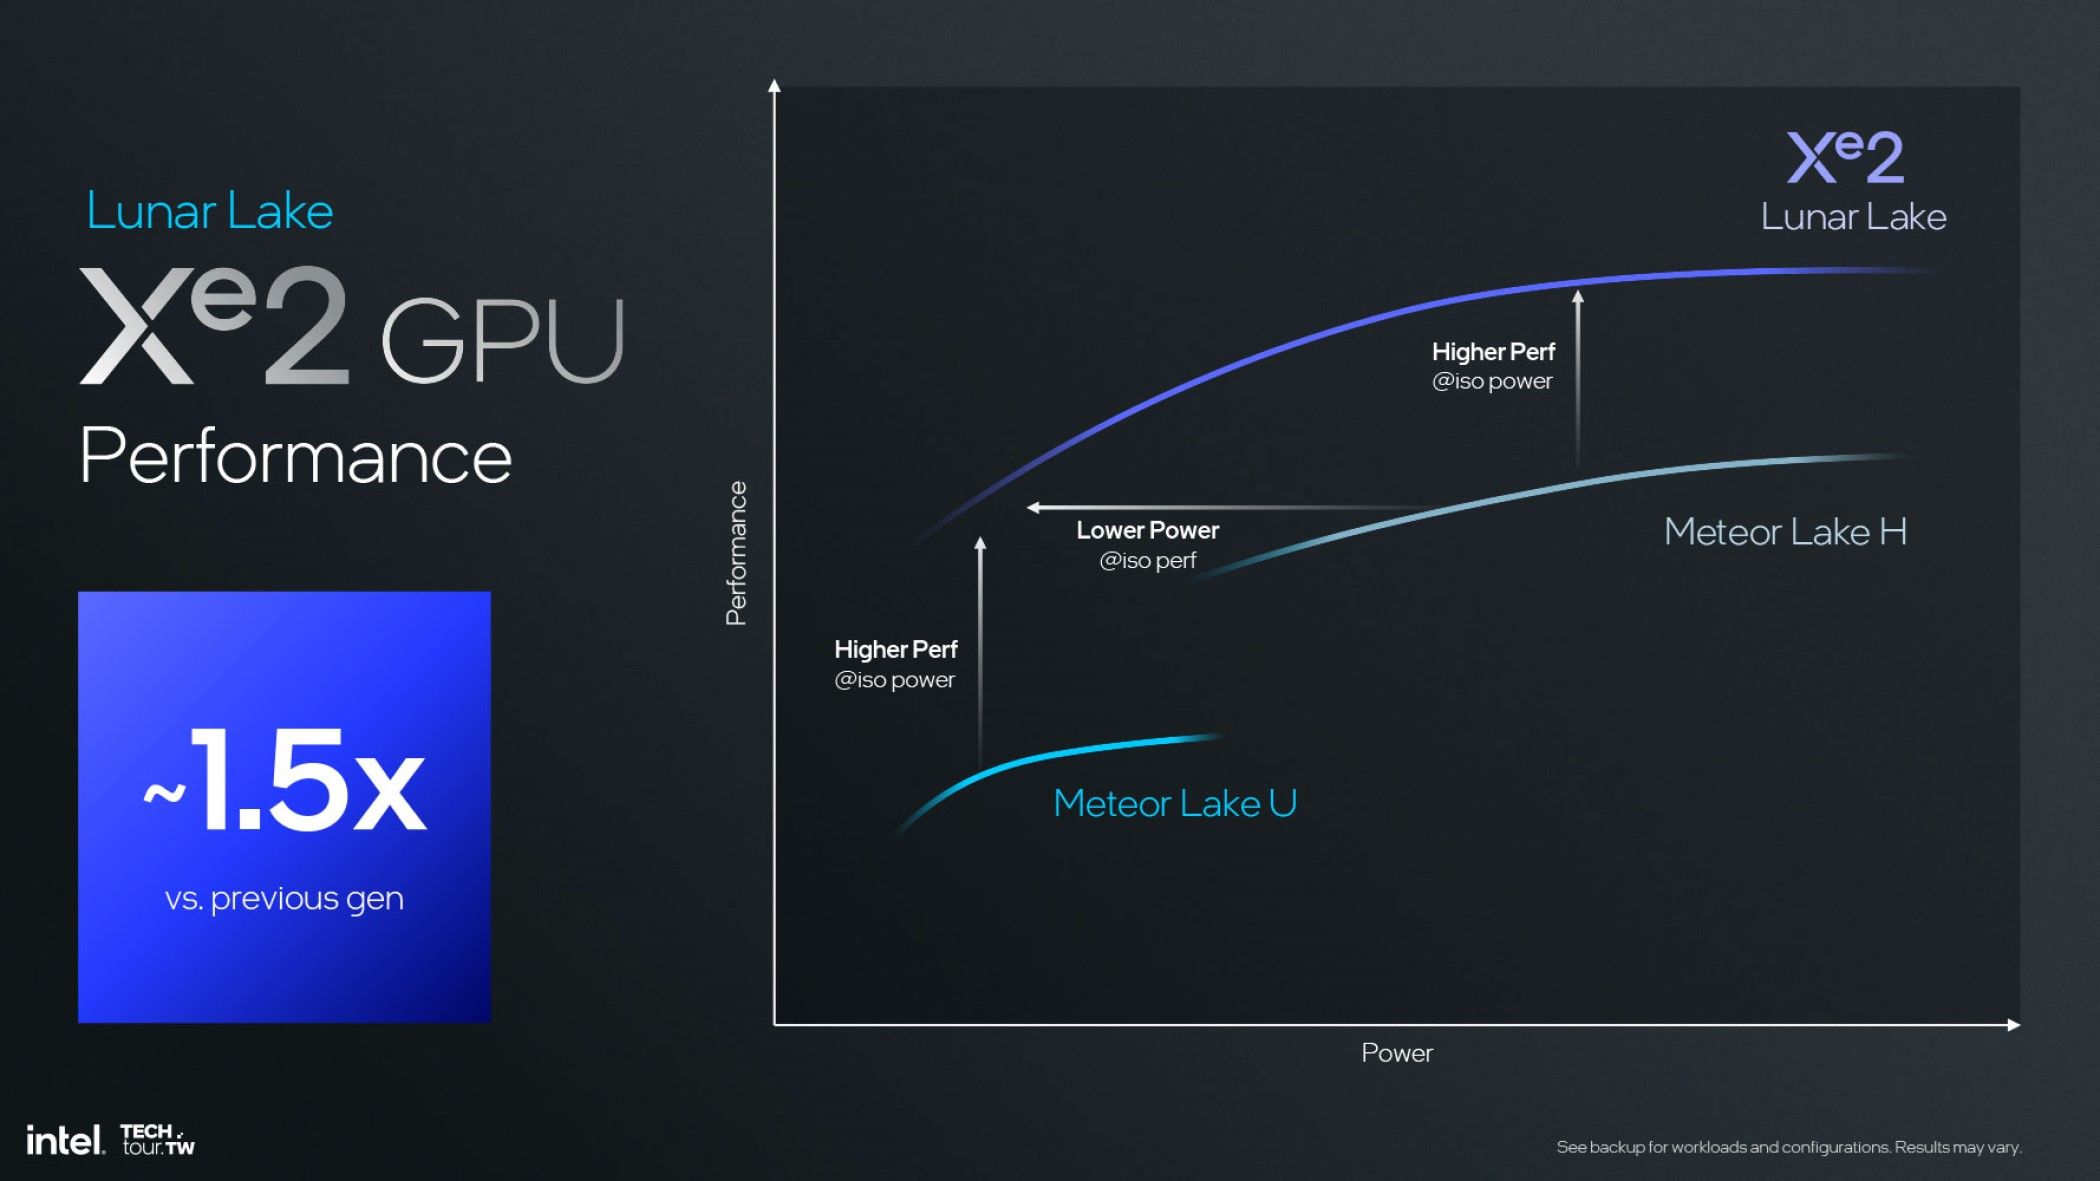 Intel Battlemage iGPU performance compared to Alchemist iGPU performance.